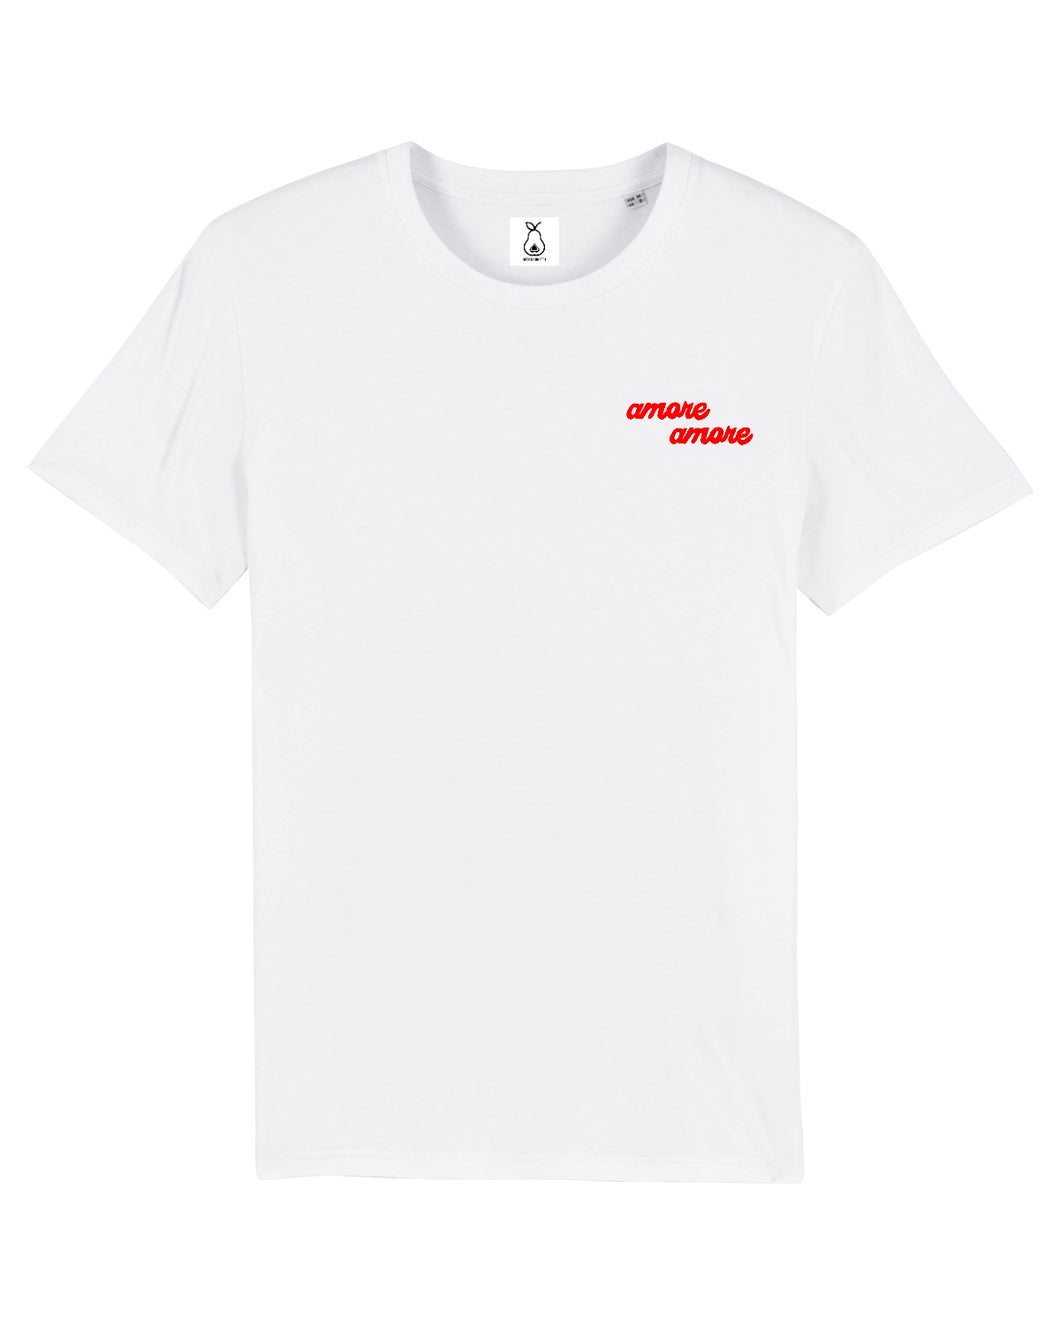 Amore 2.0 - T-Shirt - White